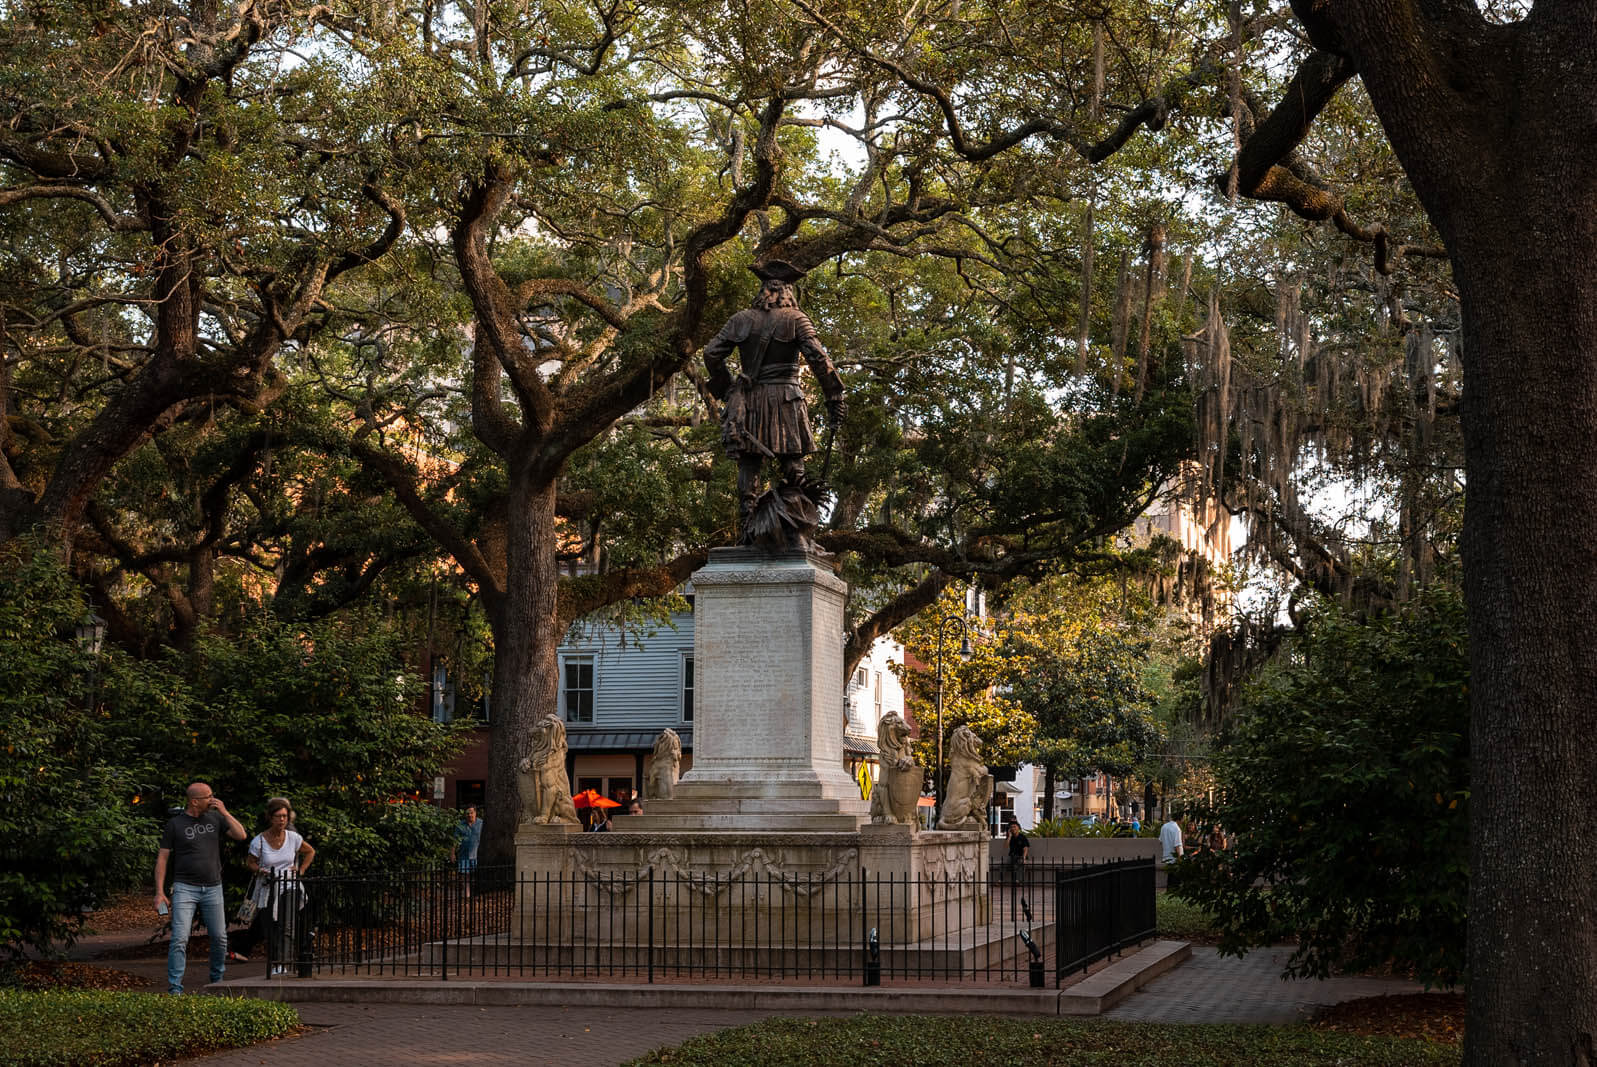 Chippewa Square in Savannah Georgia